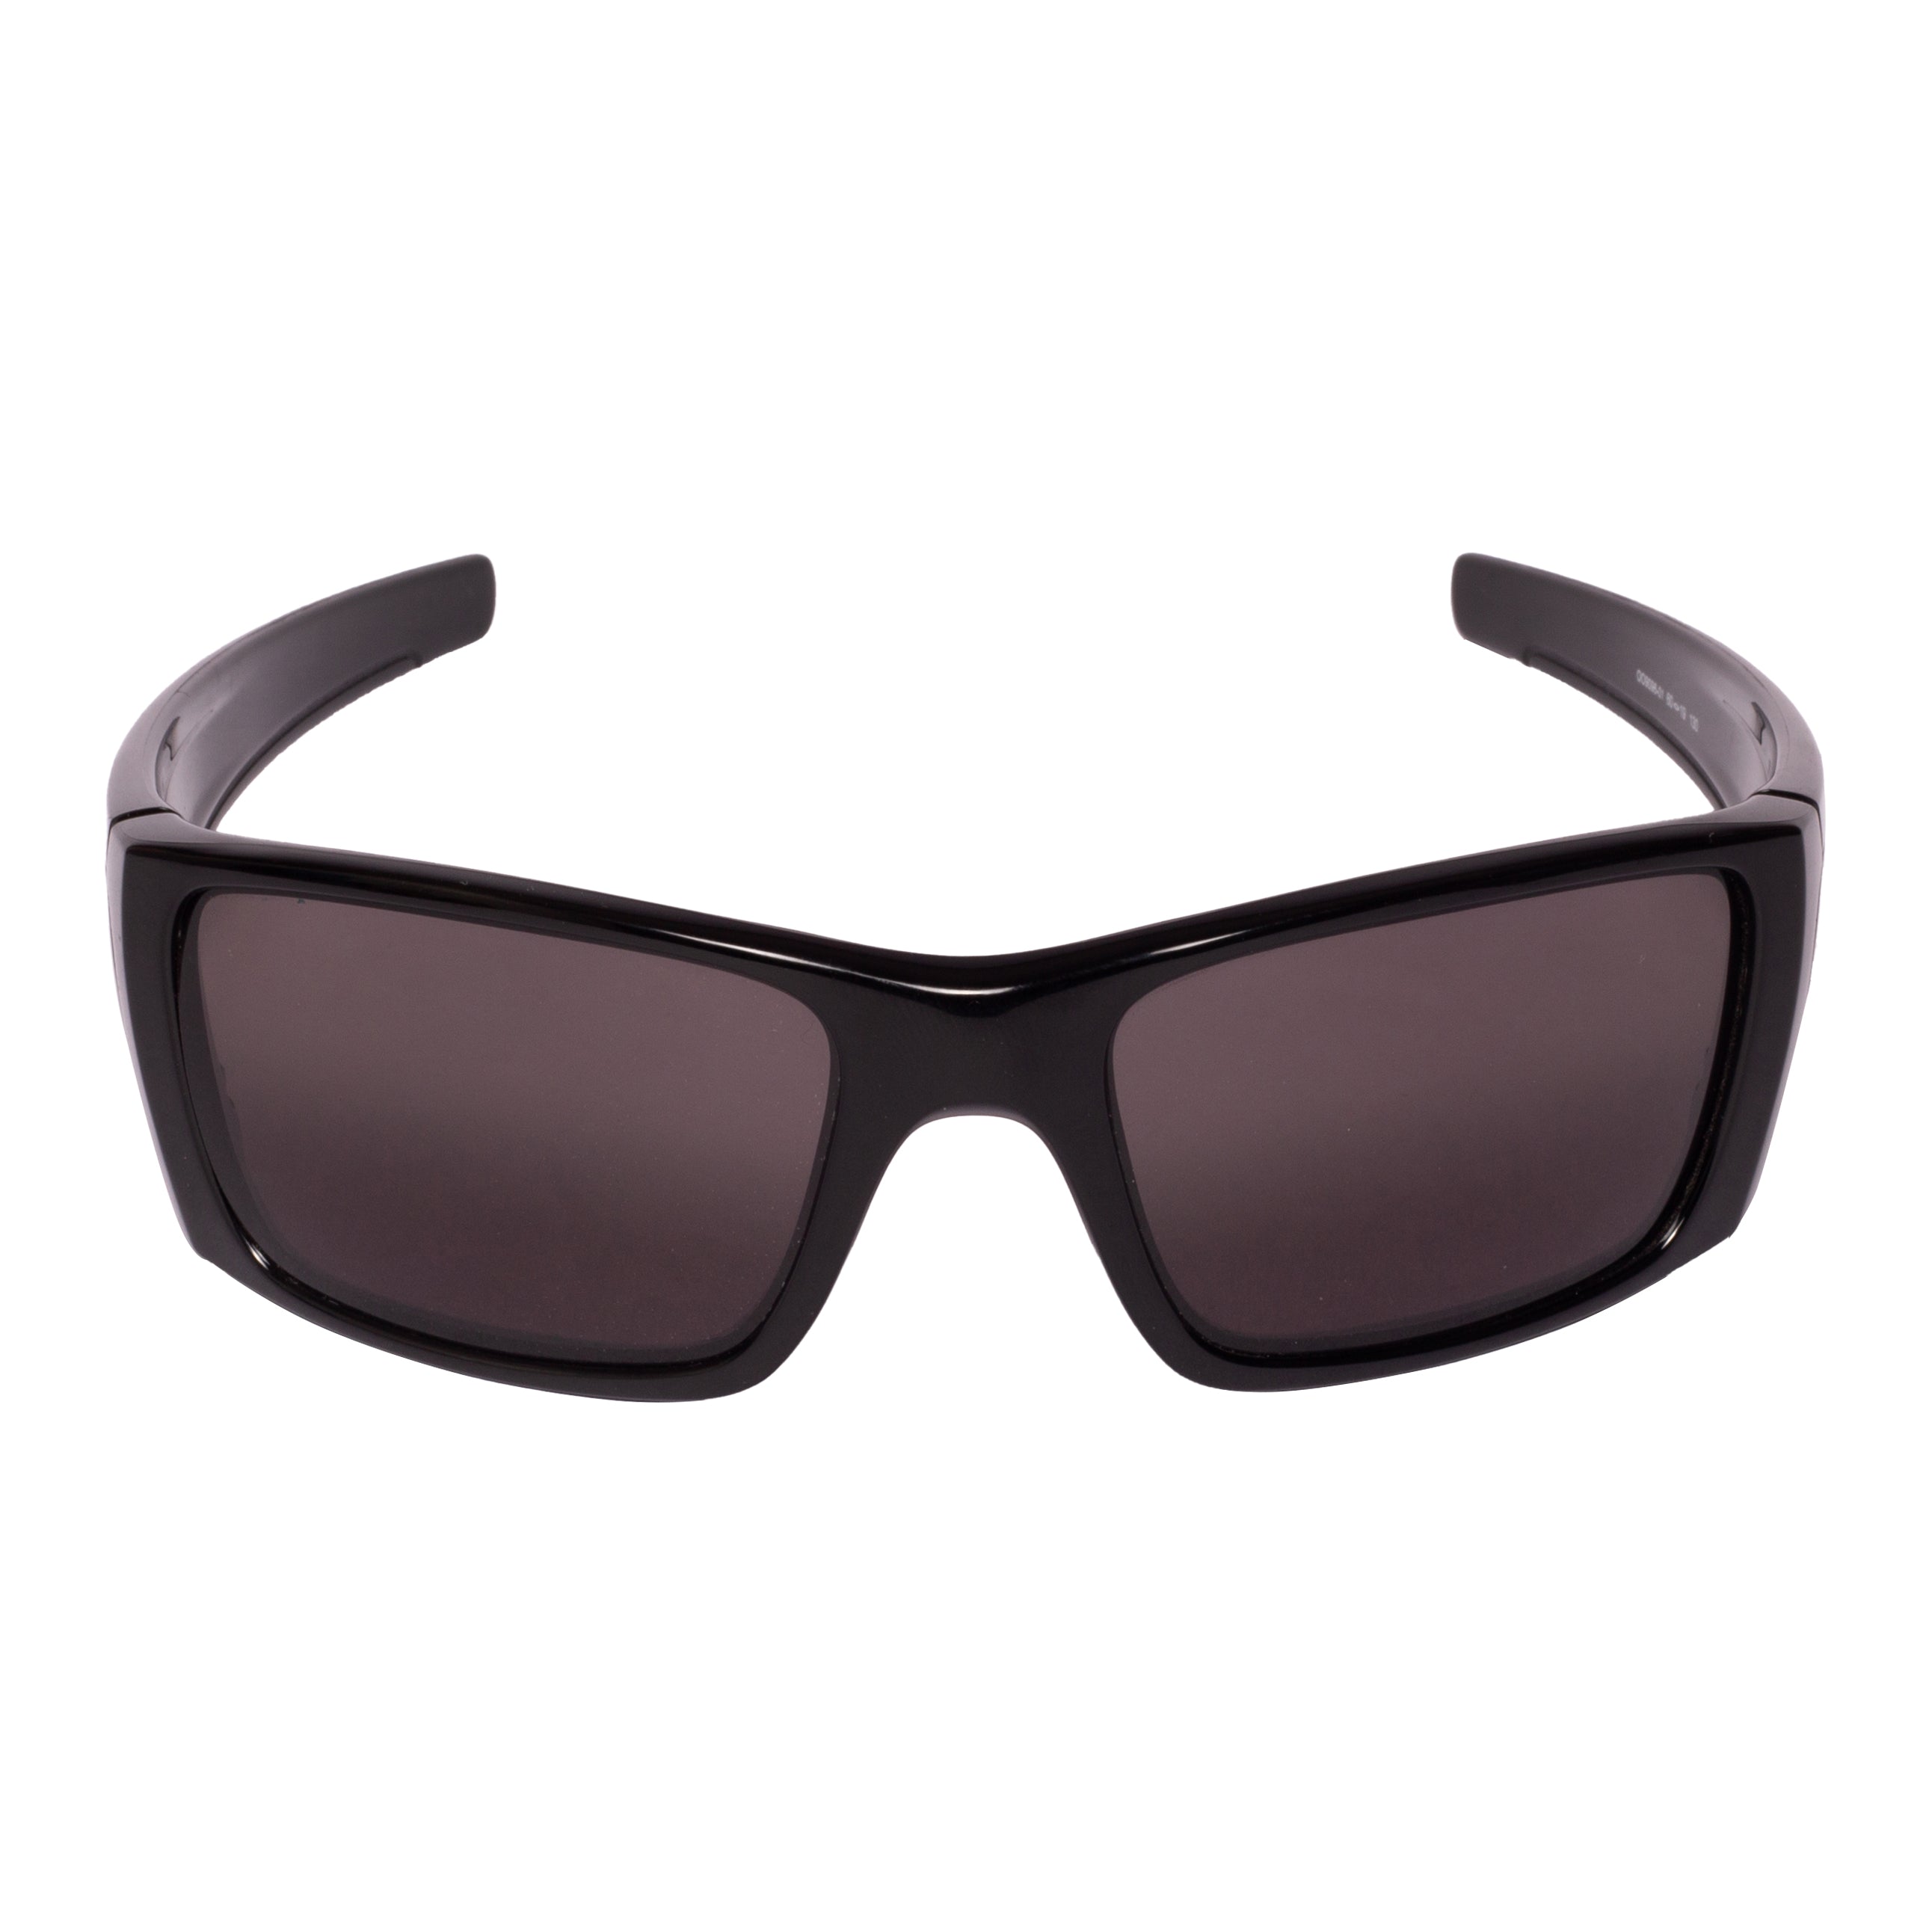 OAKLEY 9096 1 Sunglasses - Premium Sunglasses from OAKLEY - Just Rs. 9190! Shop now at Laxmi Opticians